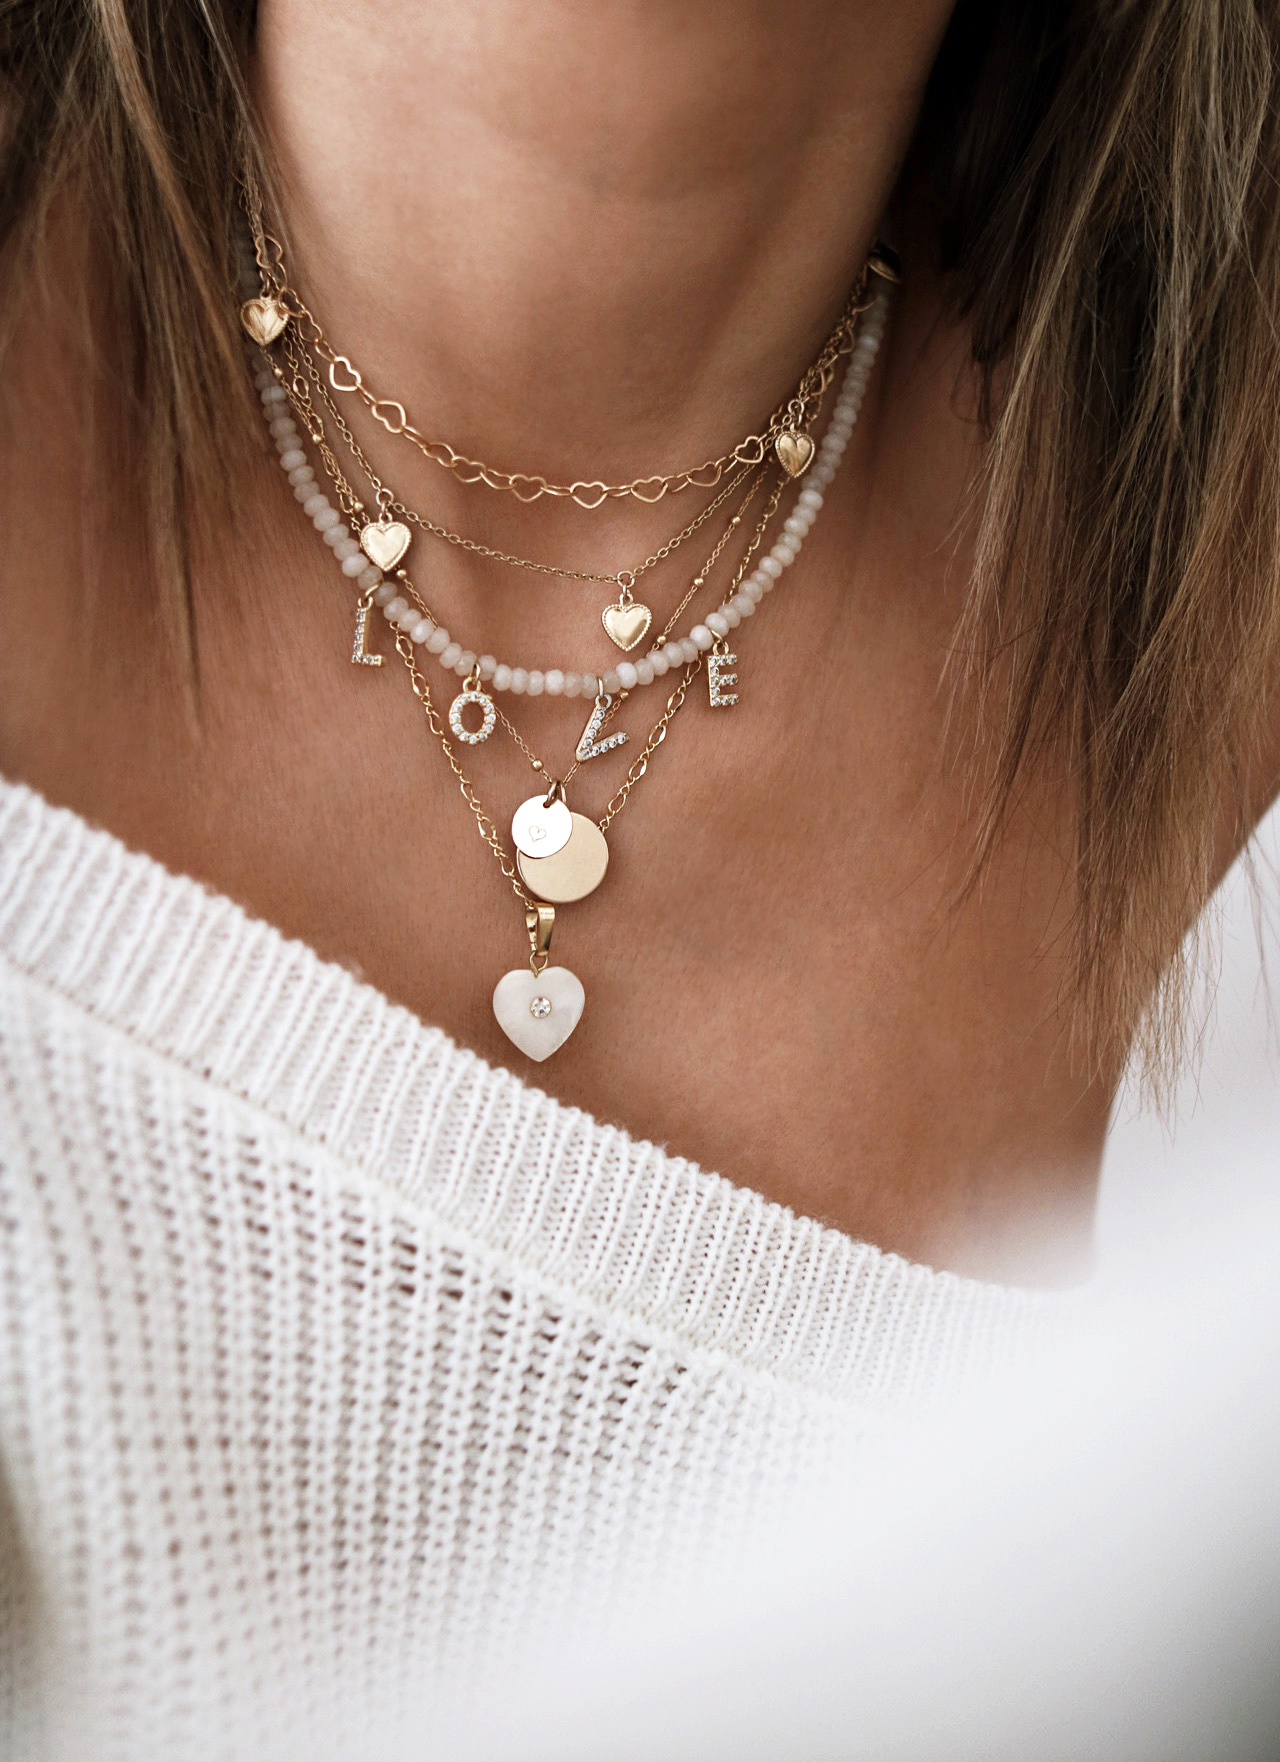 Bijoux addict, collier or, necklaces lover, 